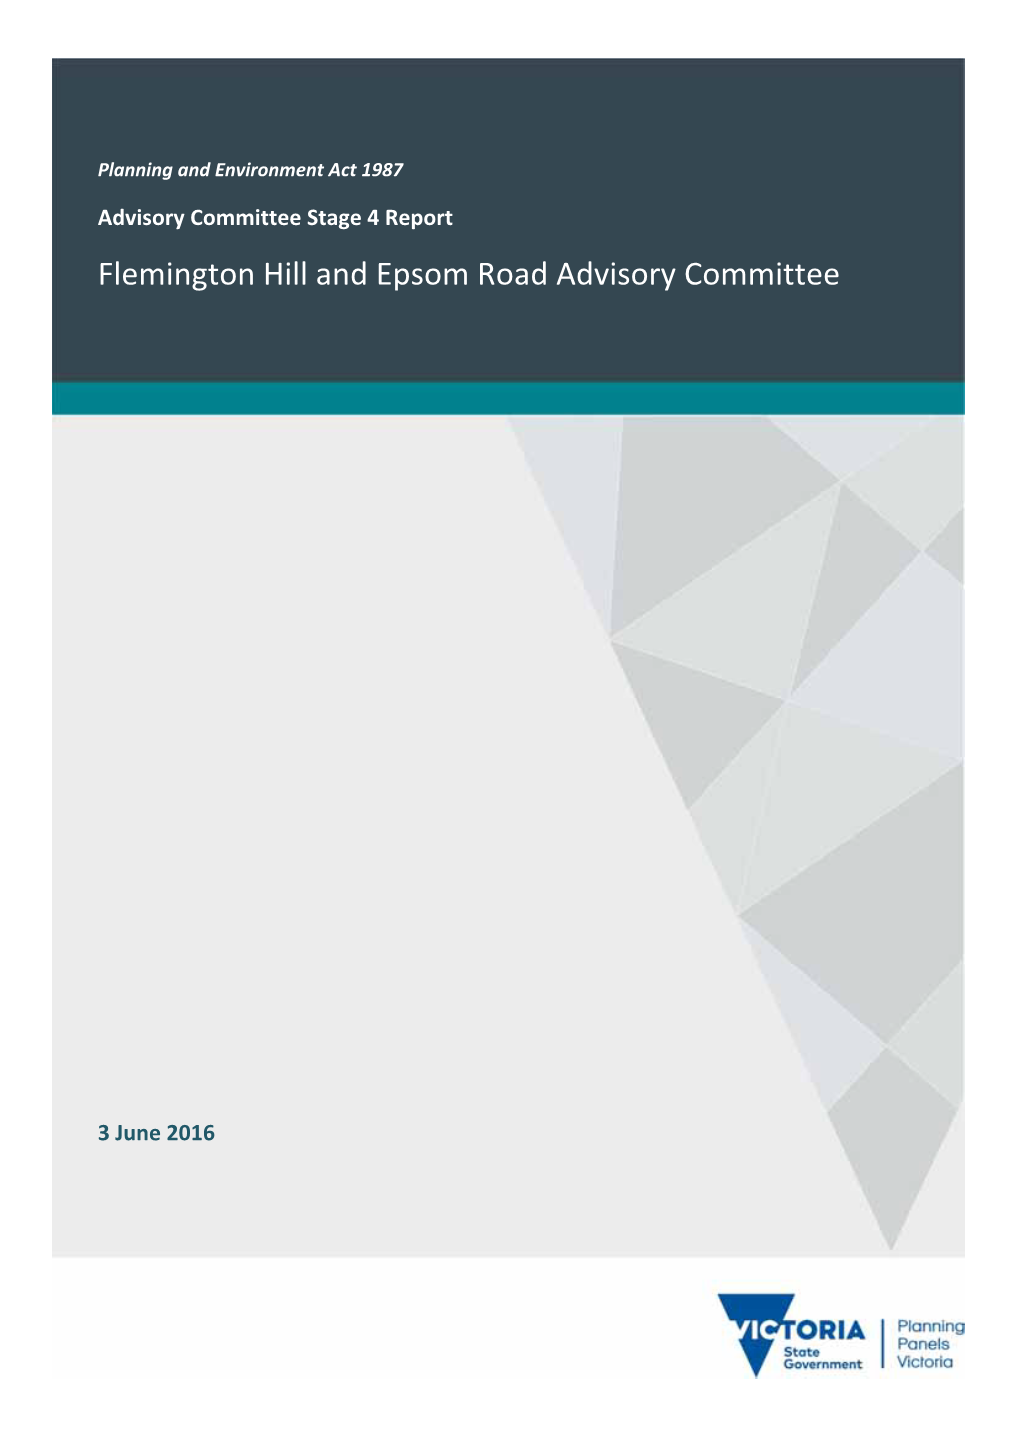 Flemington Hill and Epsom Road Advisory Committee